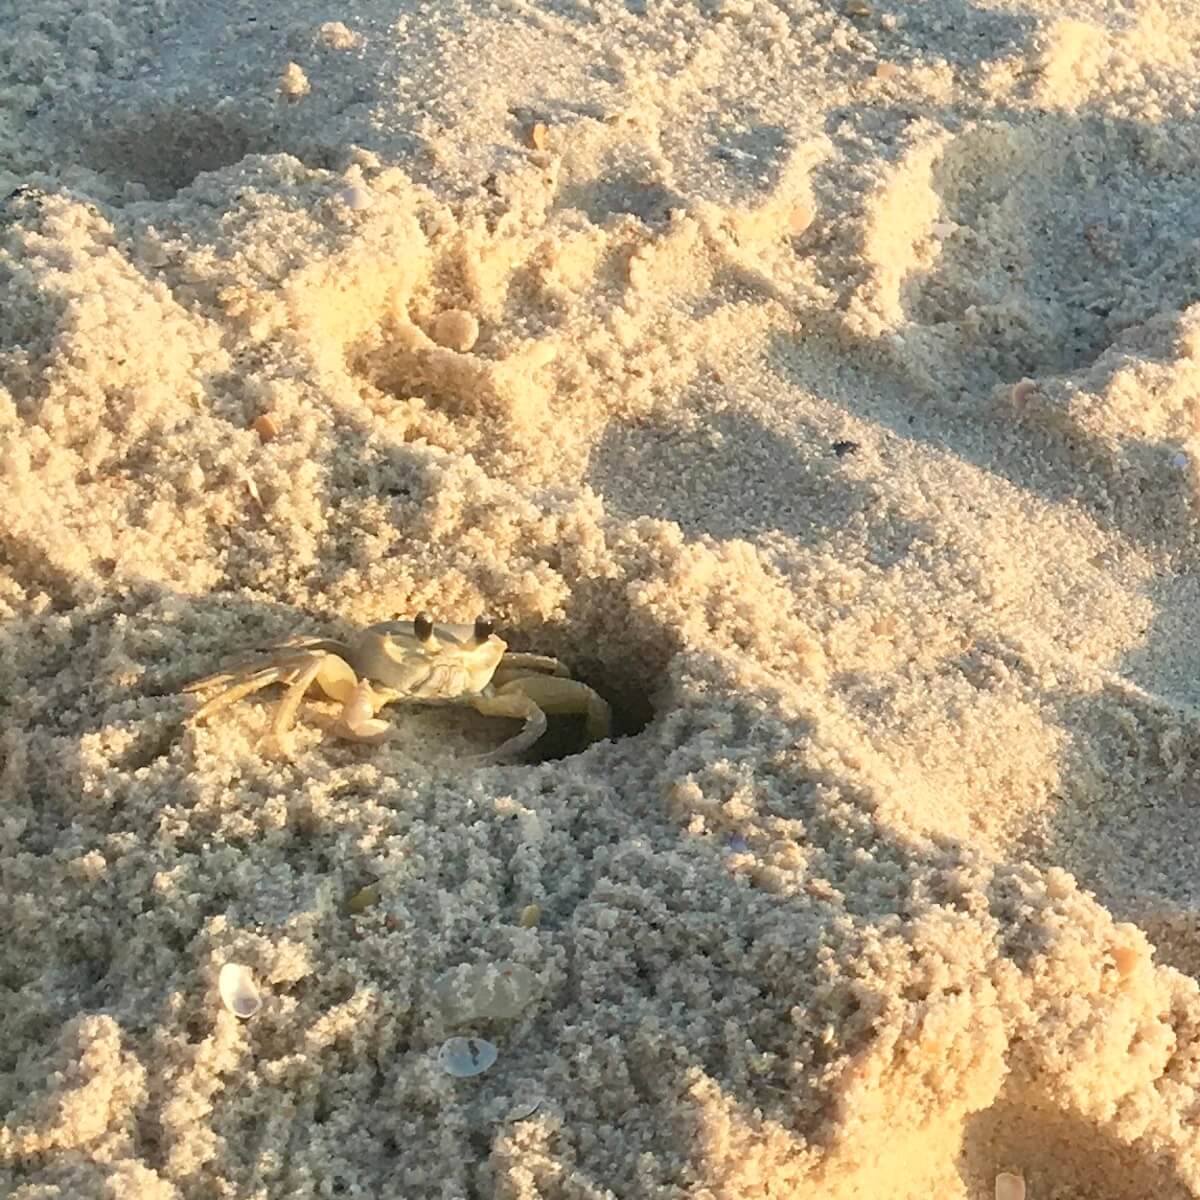 Crab in sand st george island